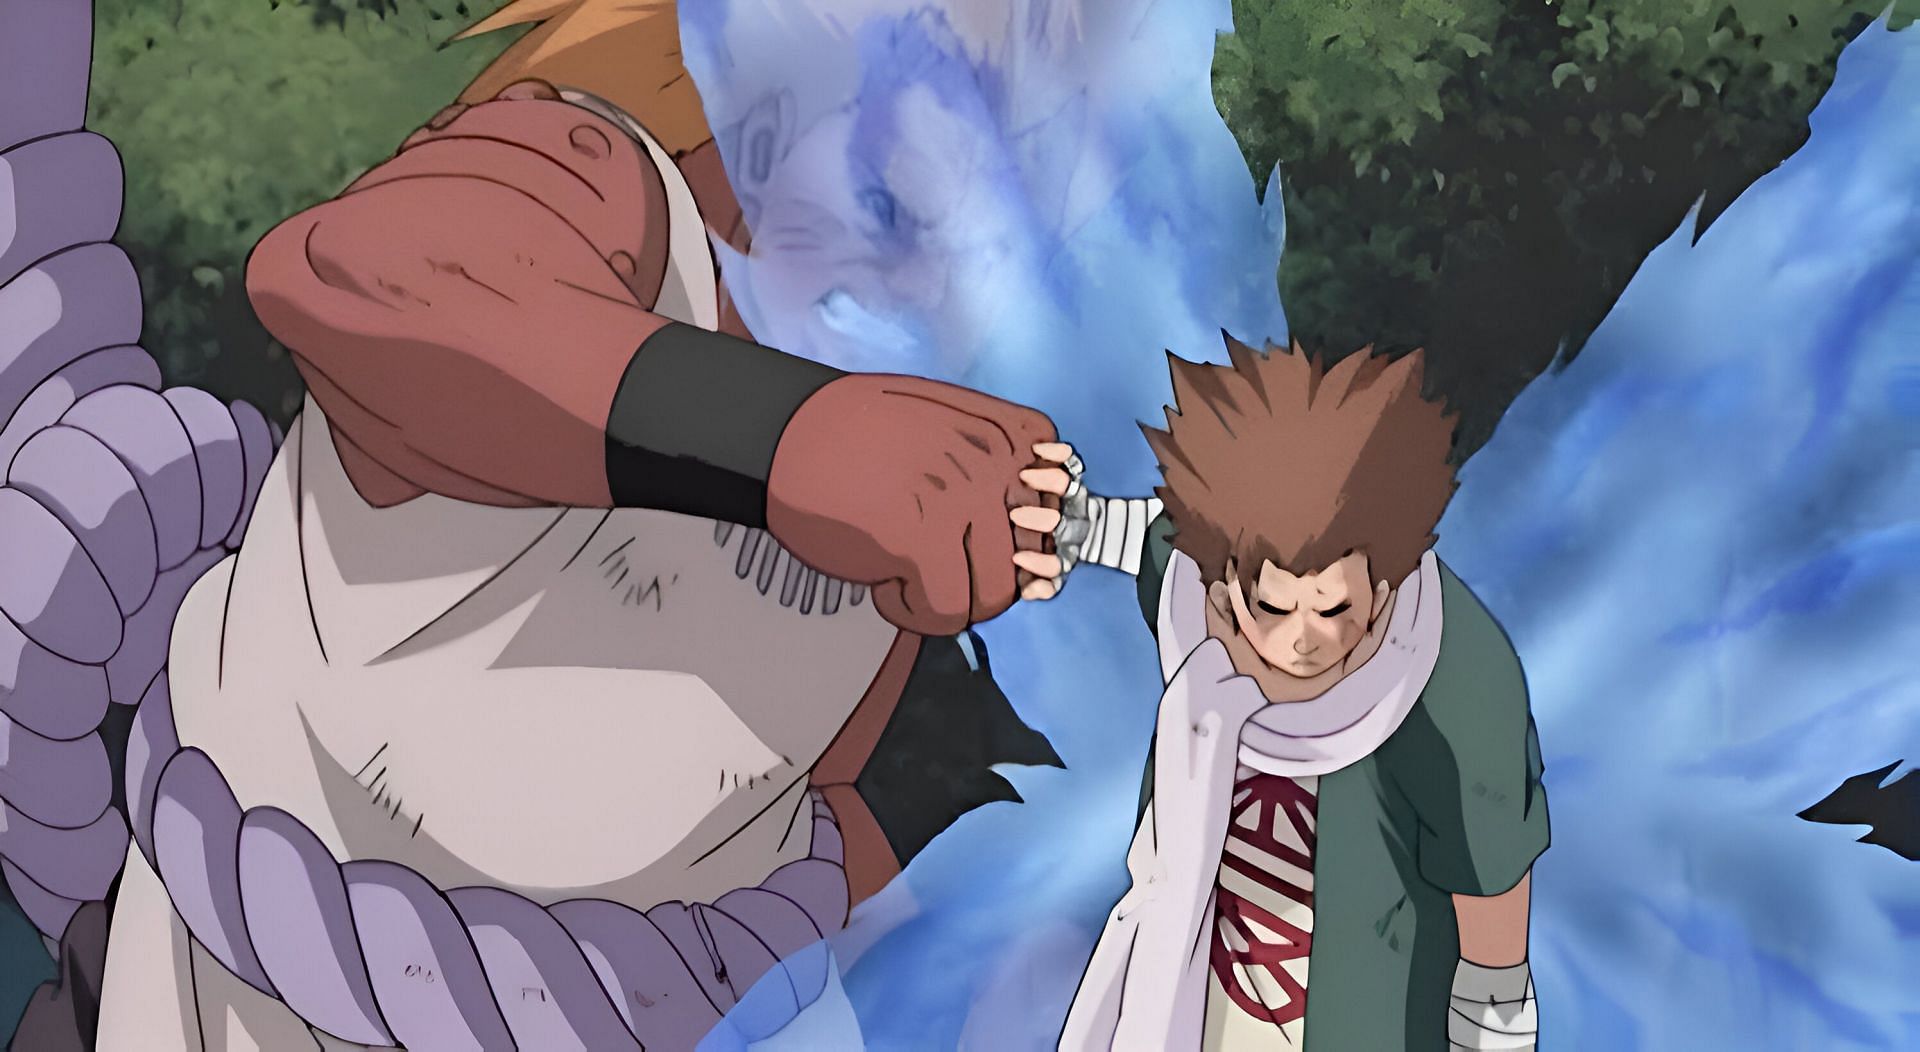 Jirobou (left) and Choji (right) as seen in the anime (Image via Studio Pierrot)